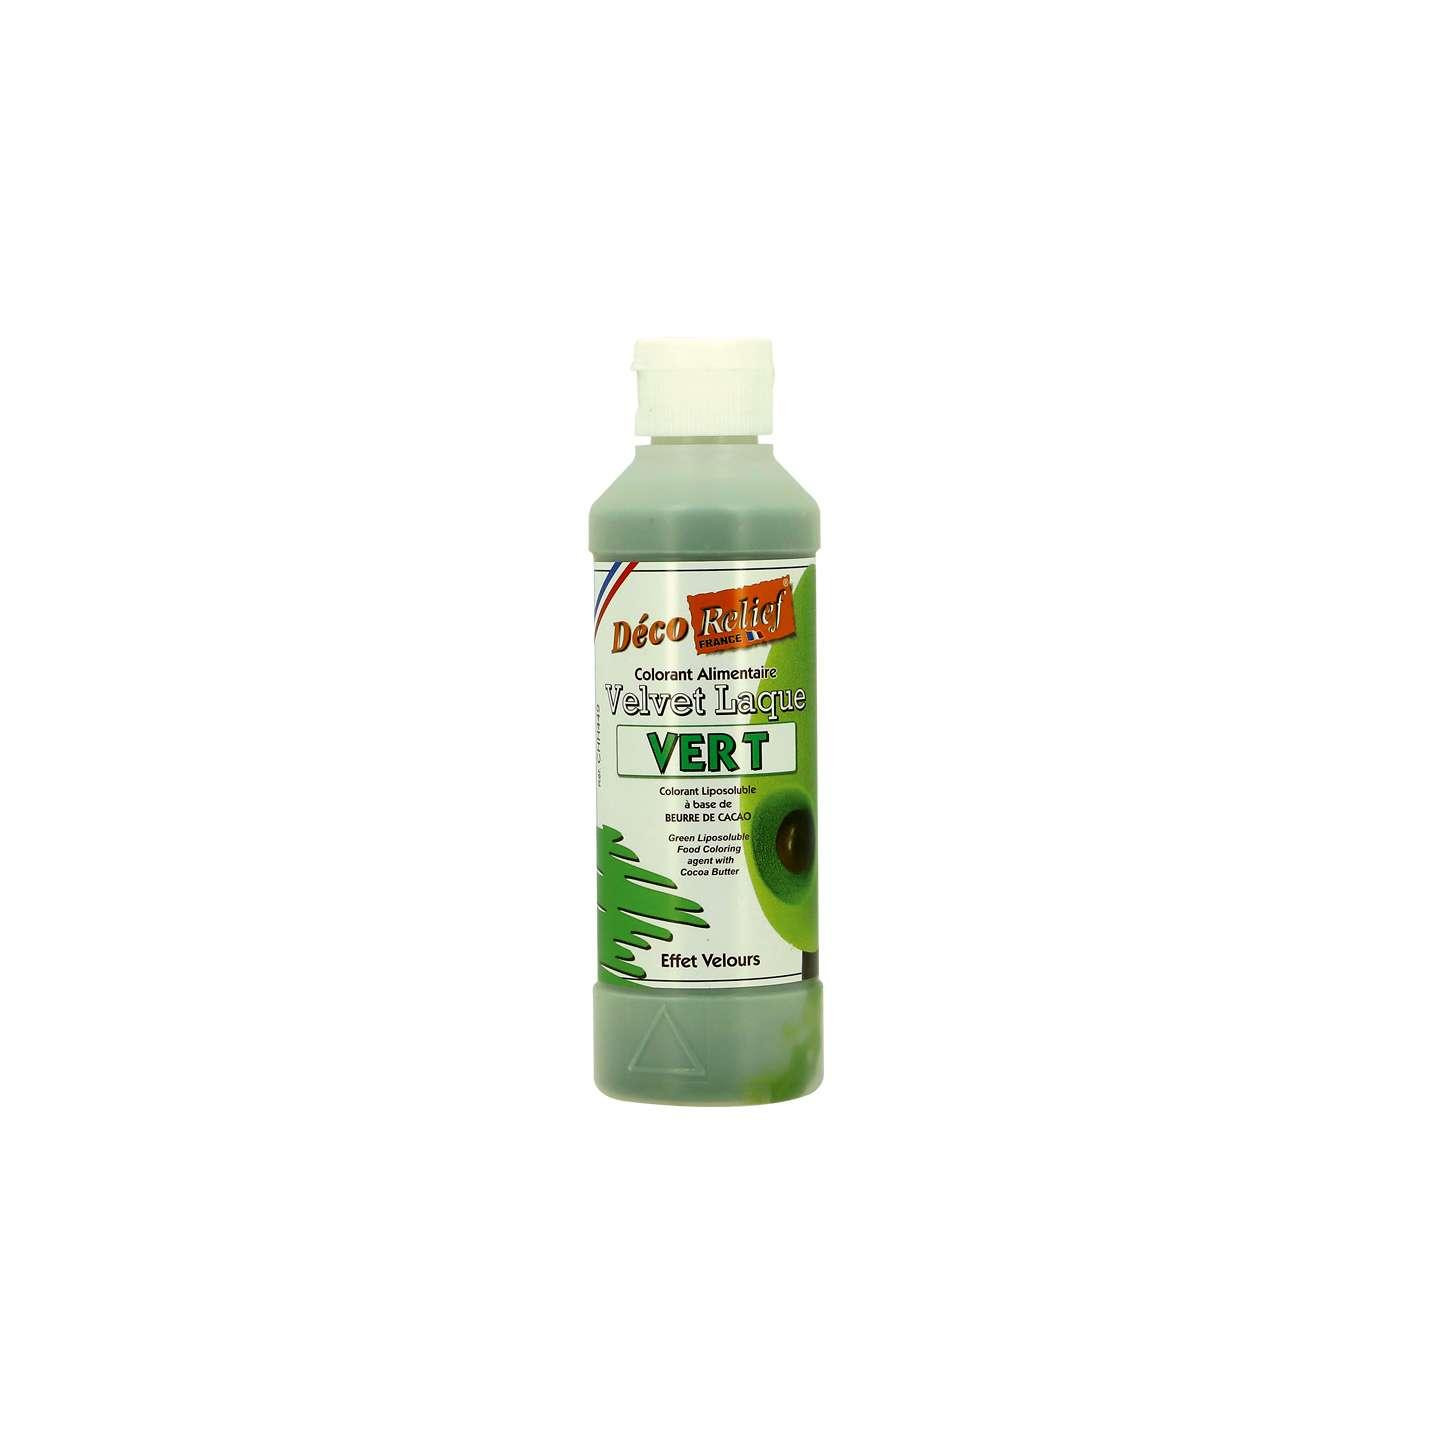 Colorant naturel vert (poudre alimentaire) 50 g - Deco Relief